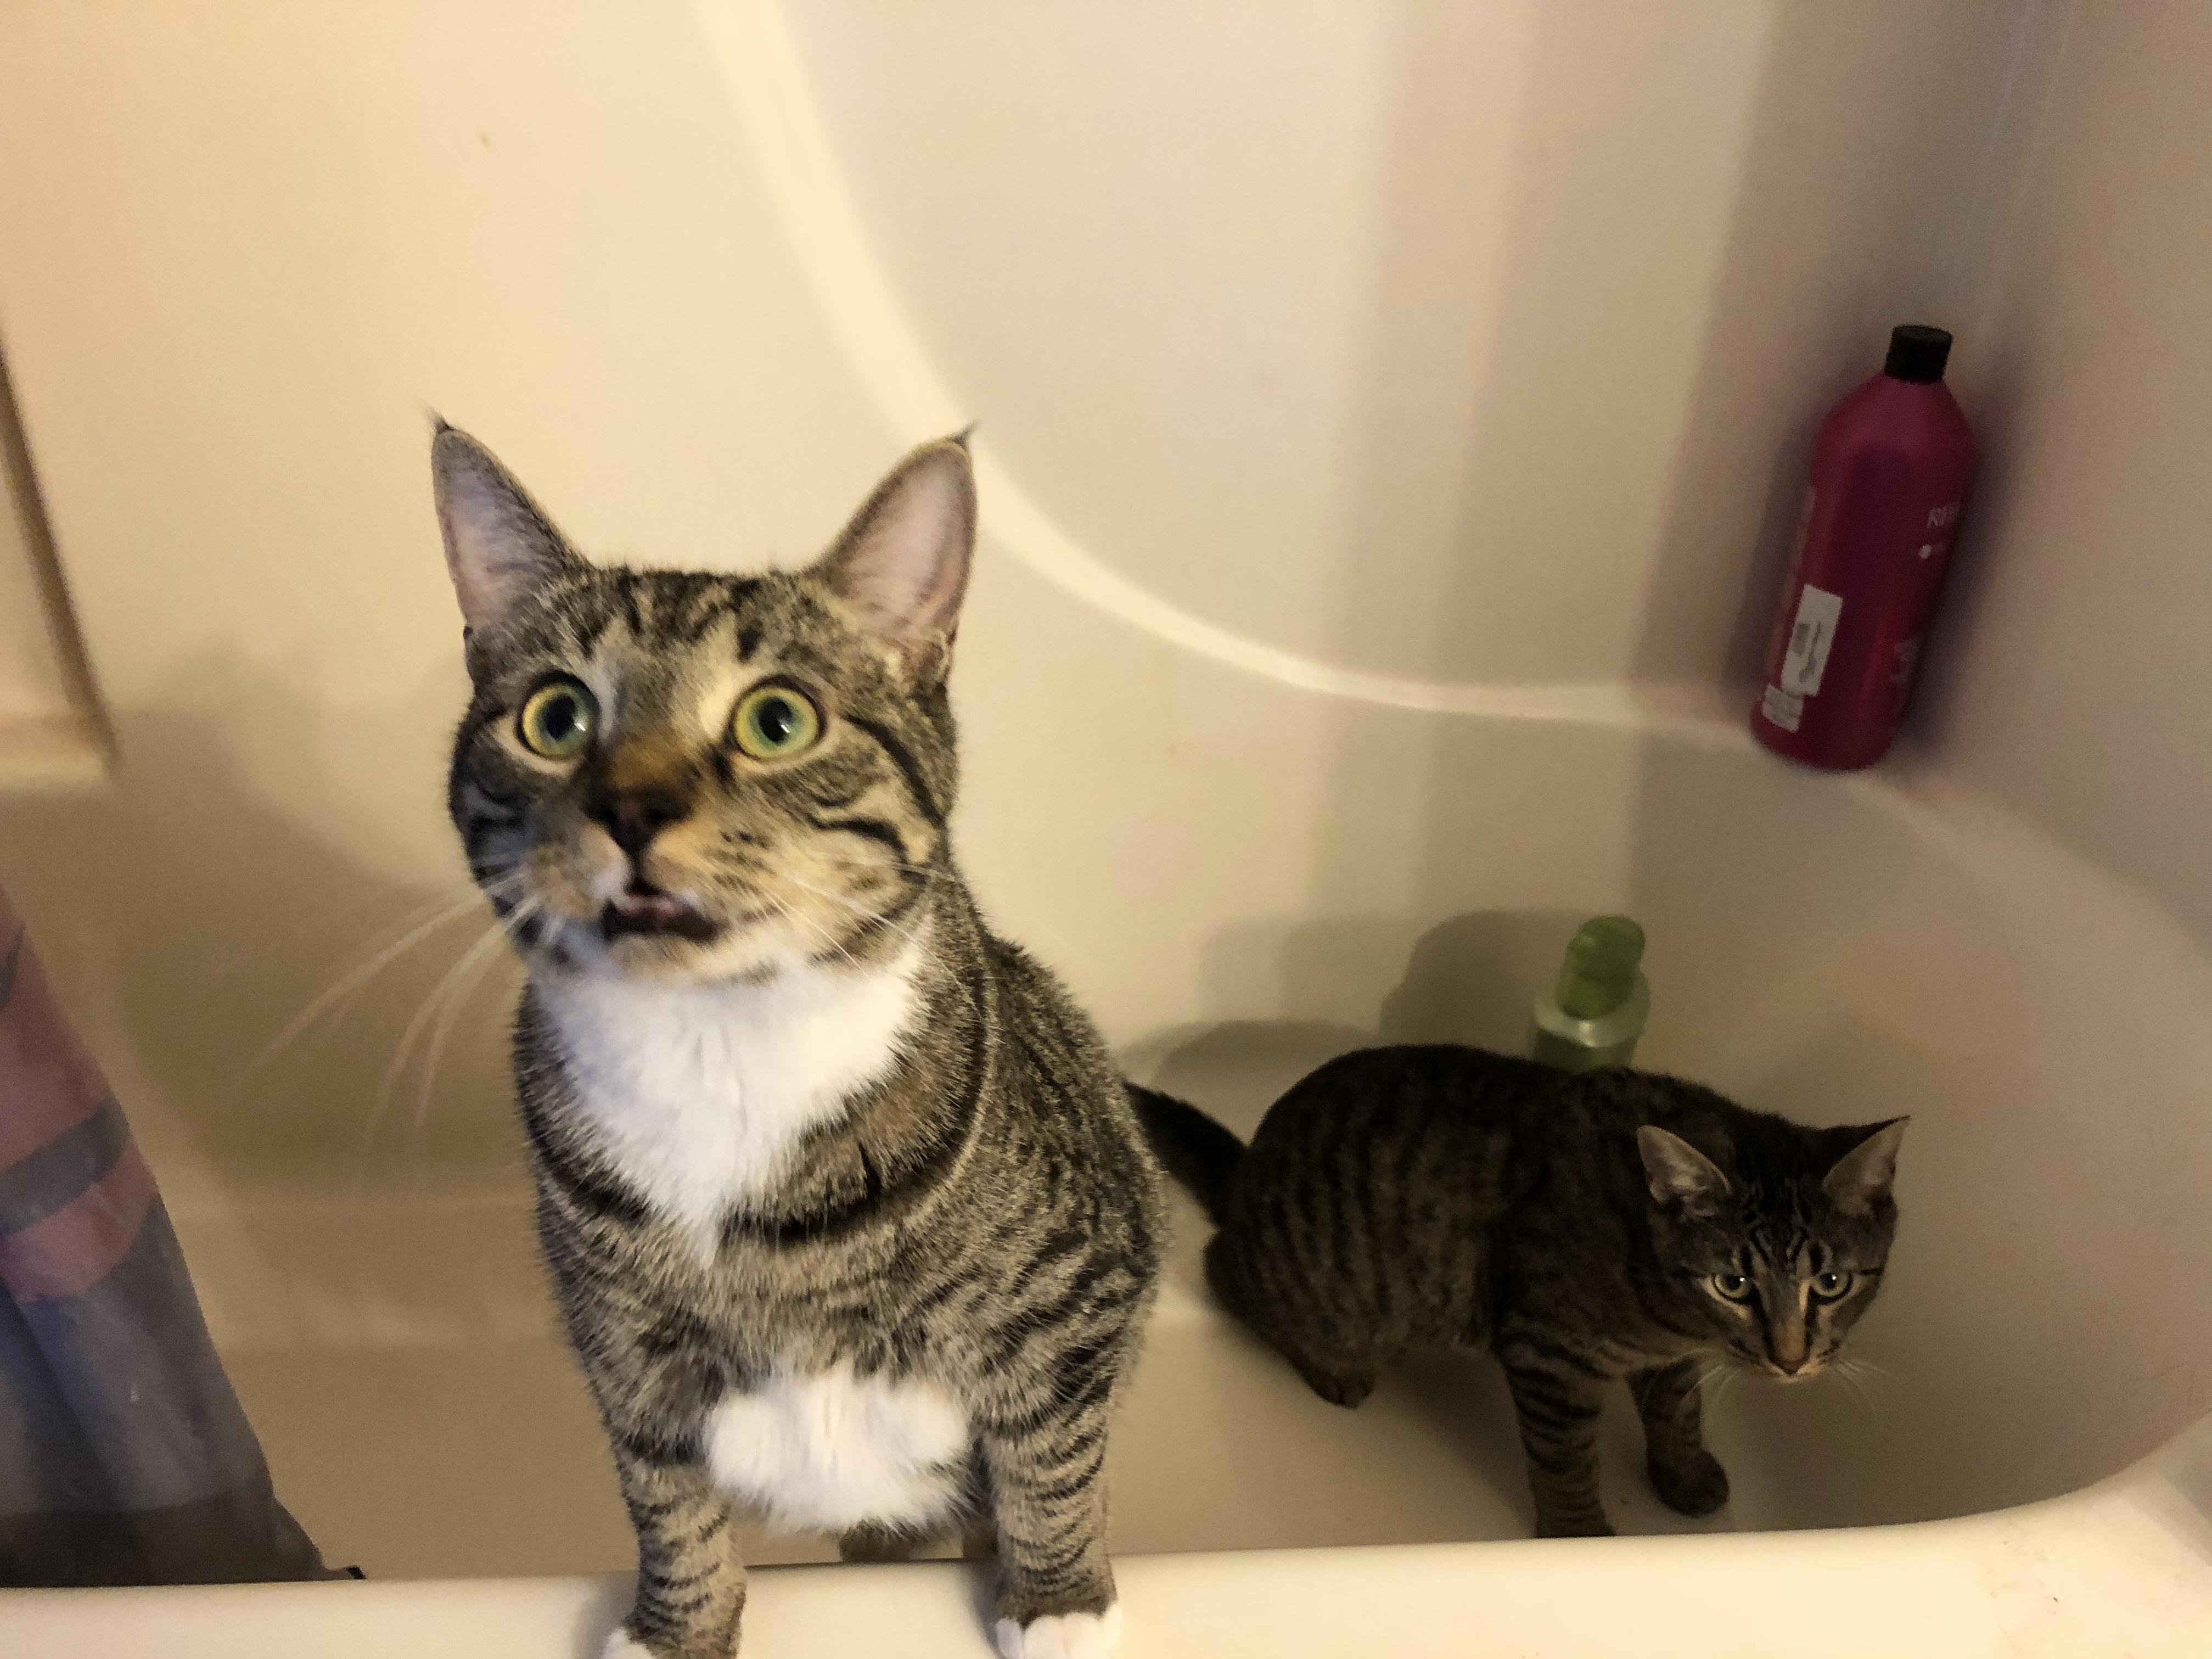 What do you mean bath time!